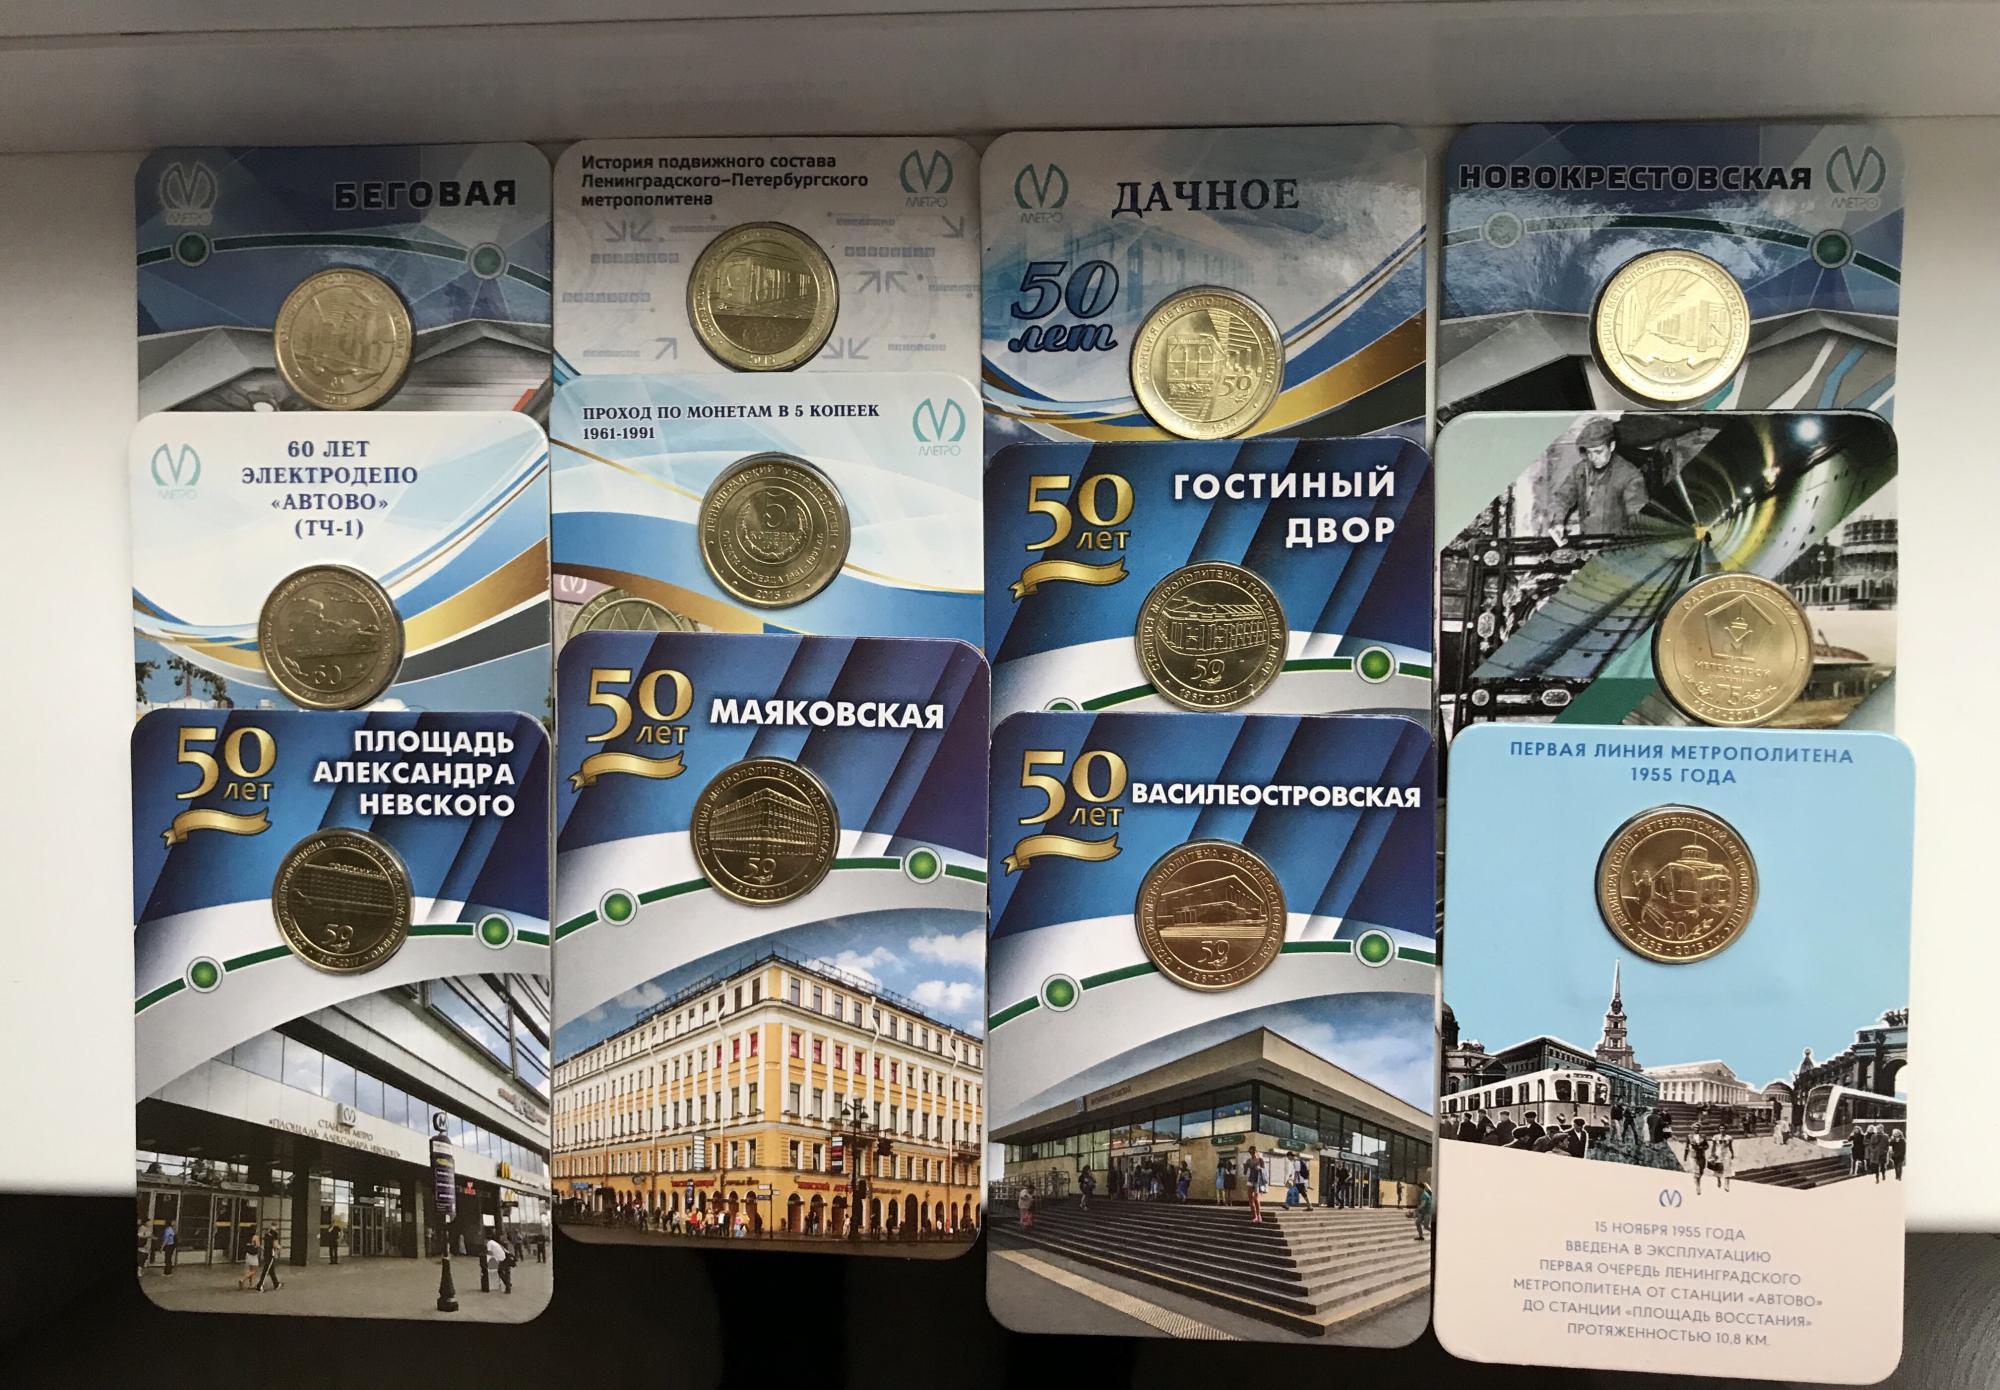 жетон на метро санкт петербурга